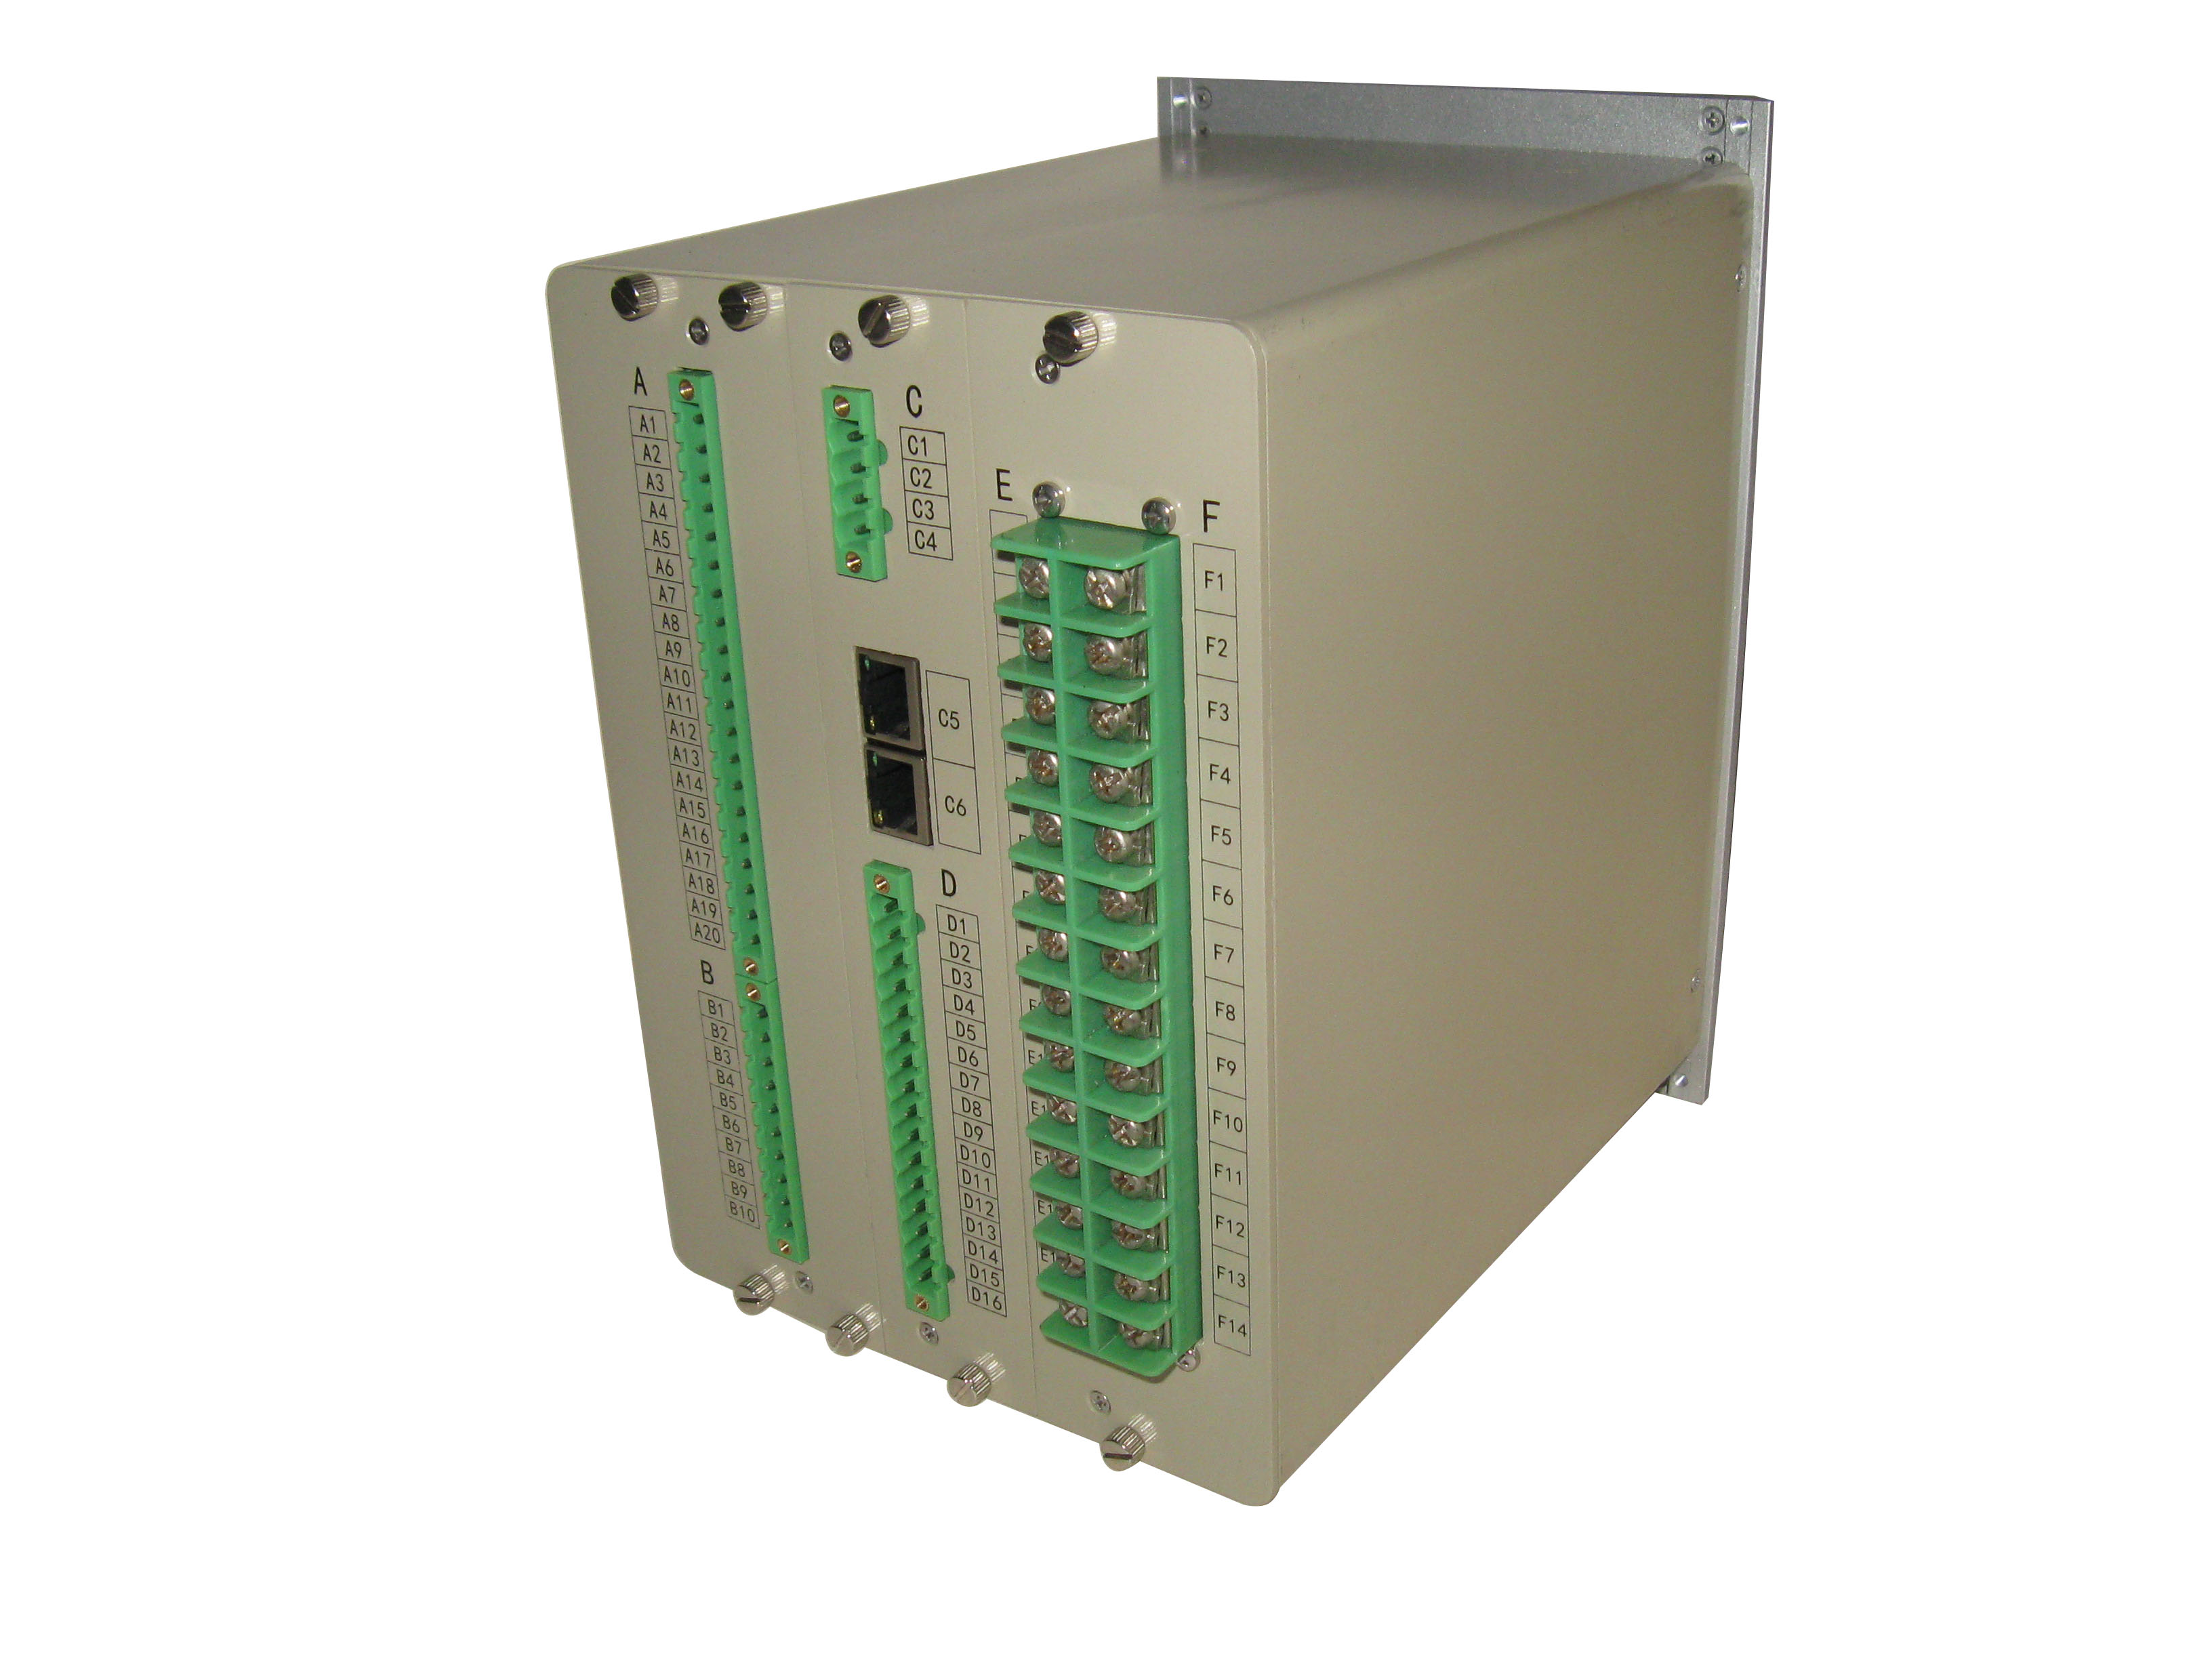 CSW-810C 微机电容器保护测控装置 兼容SEEC-810C  湖南株洲可胜电子